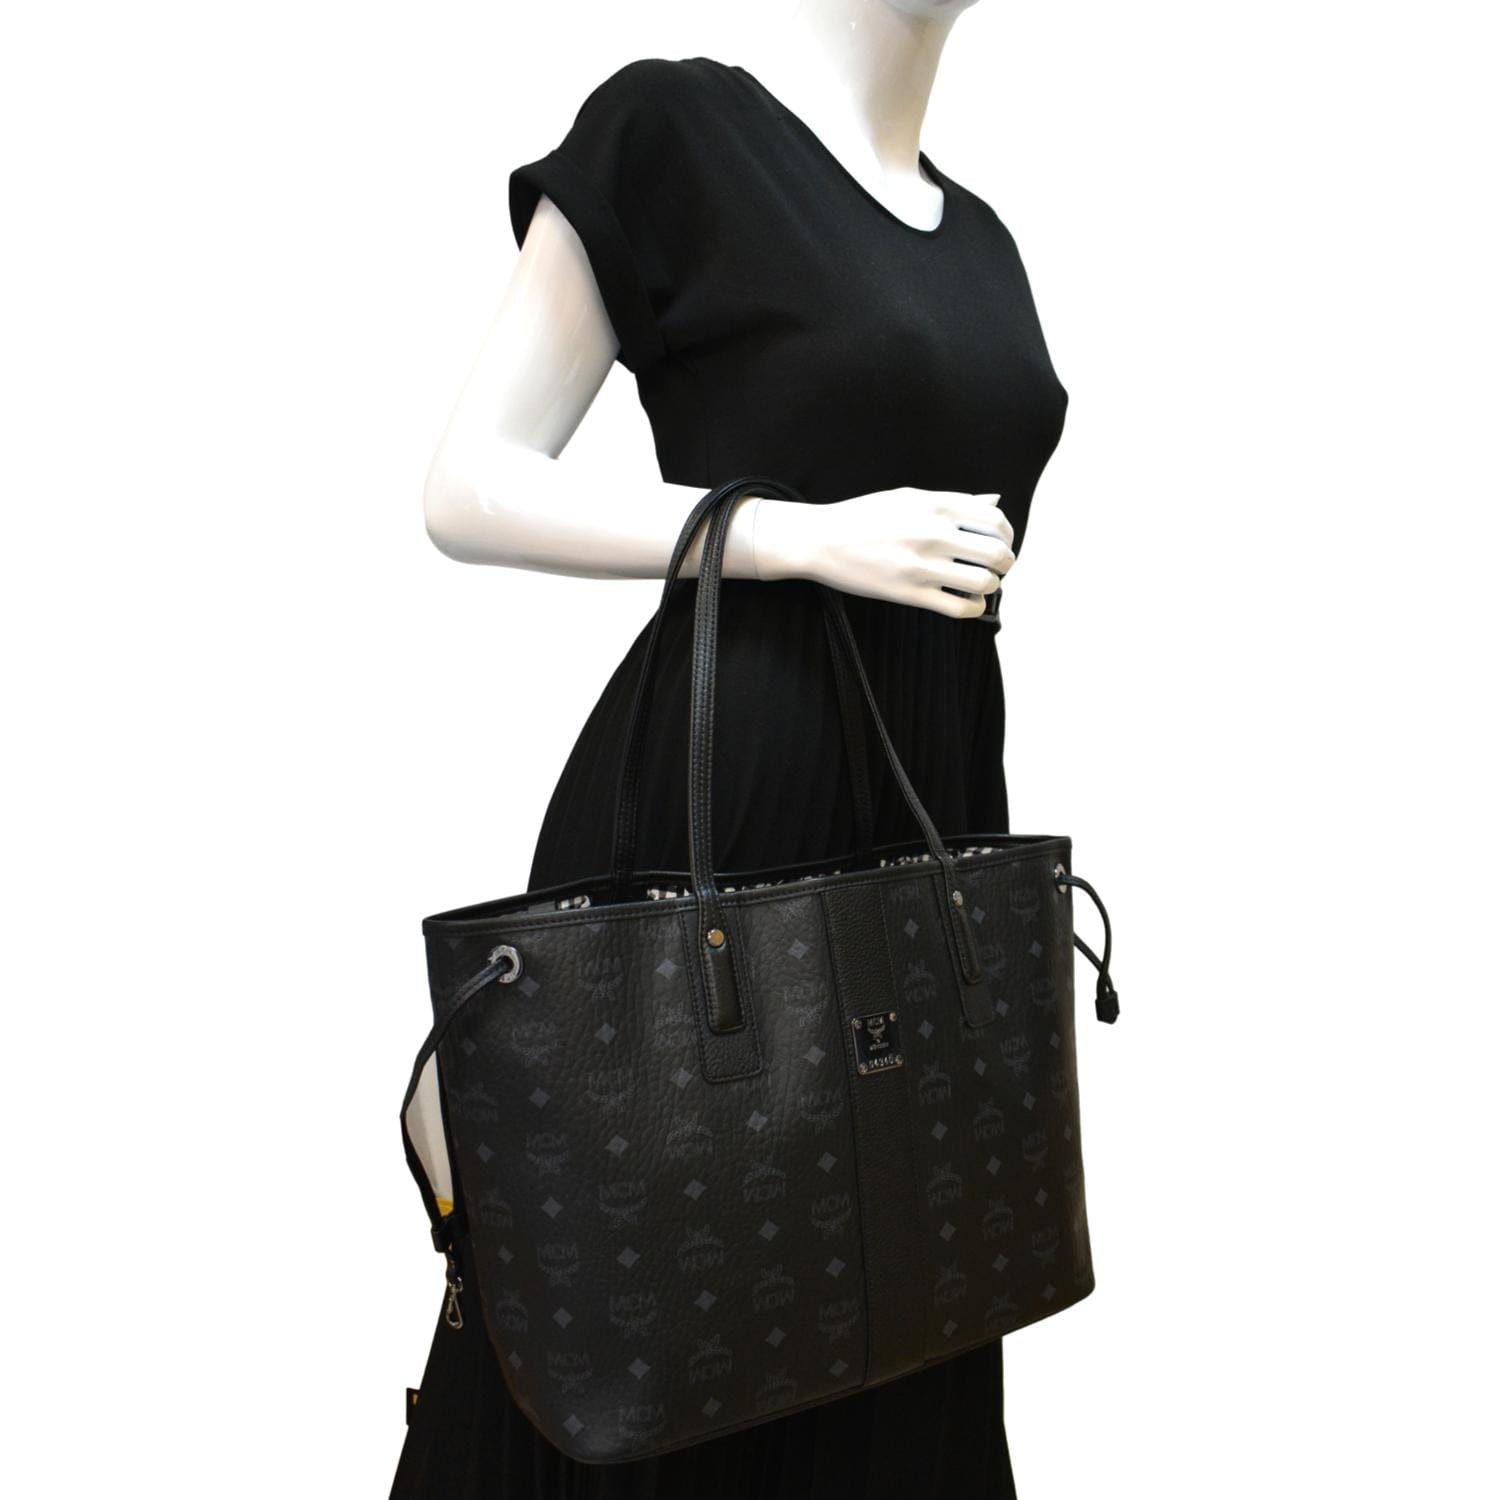 mcm handbag black